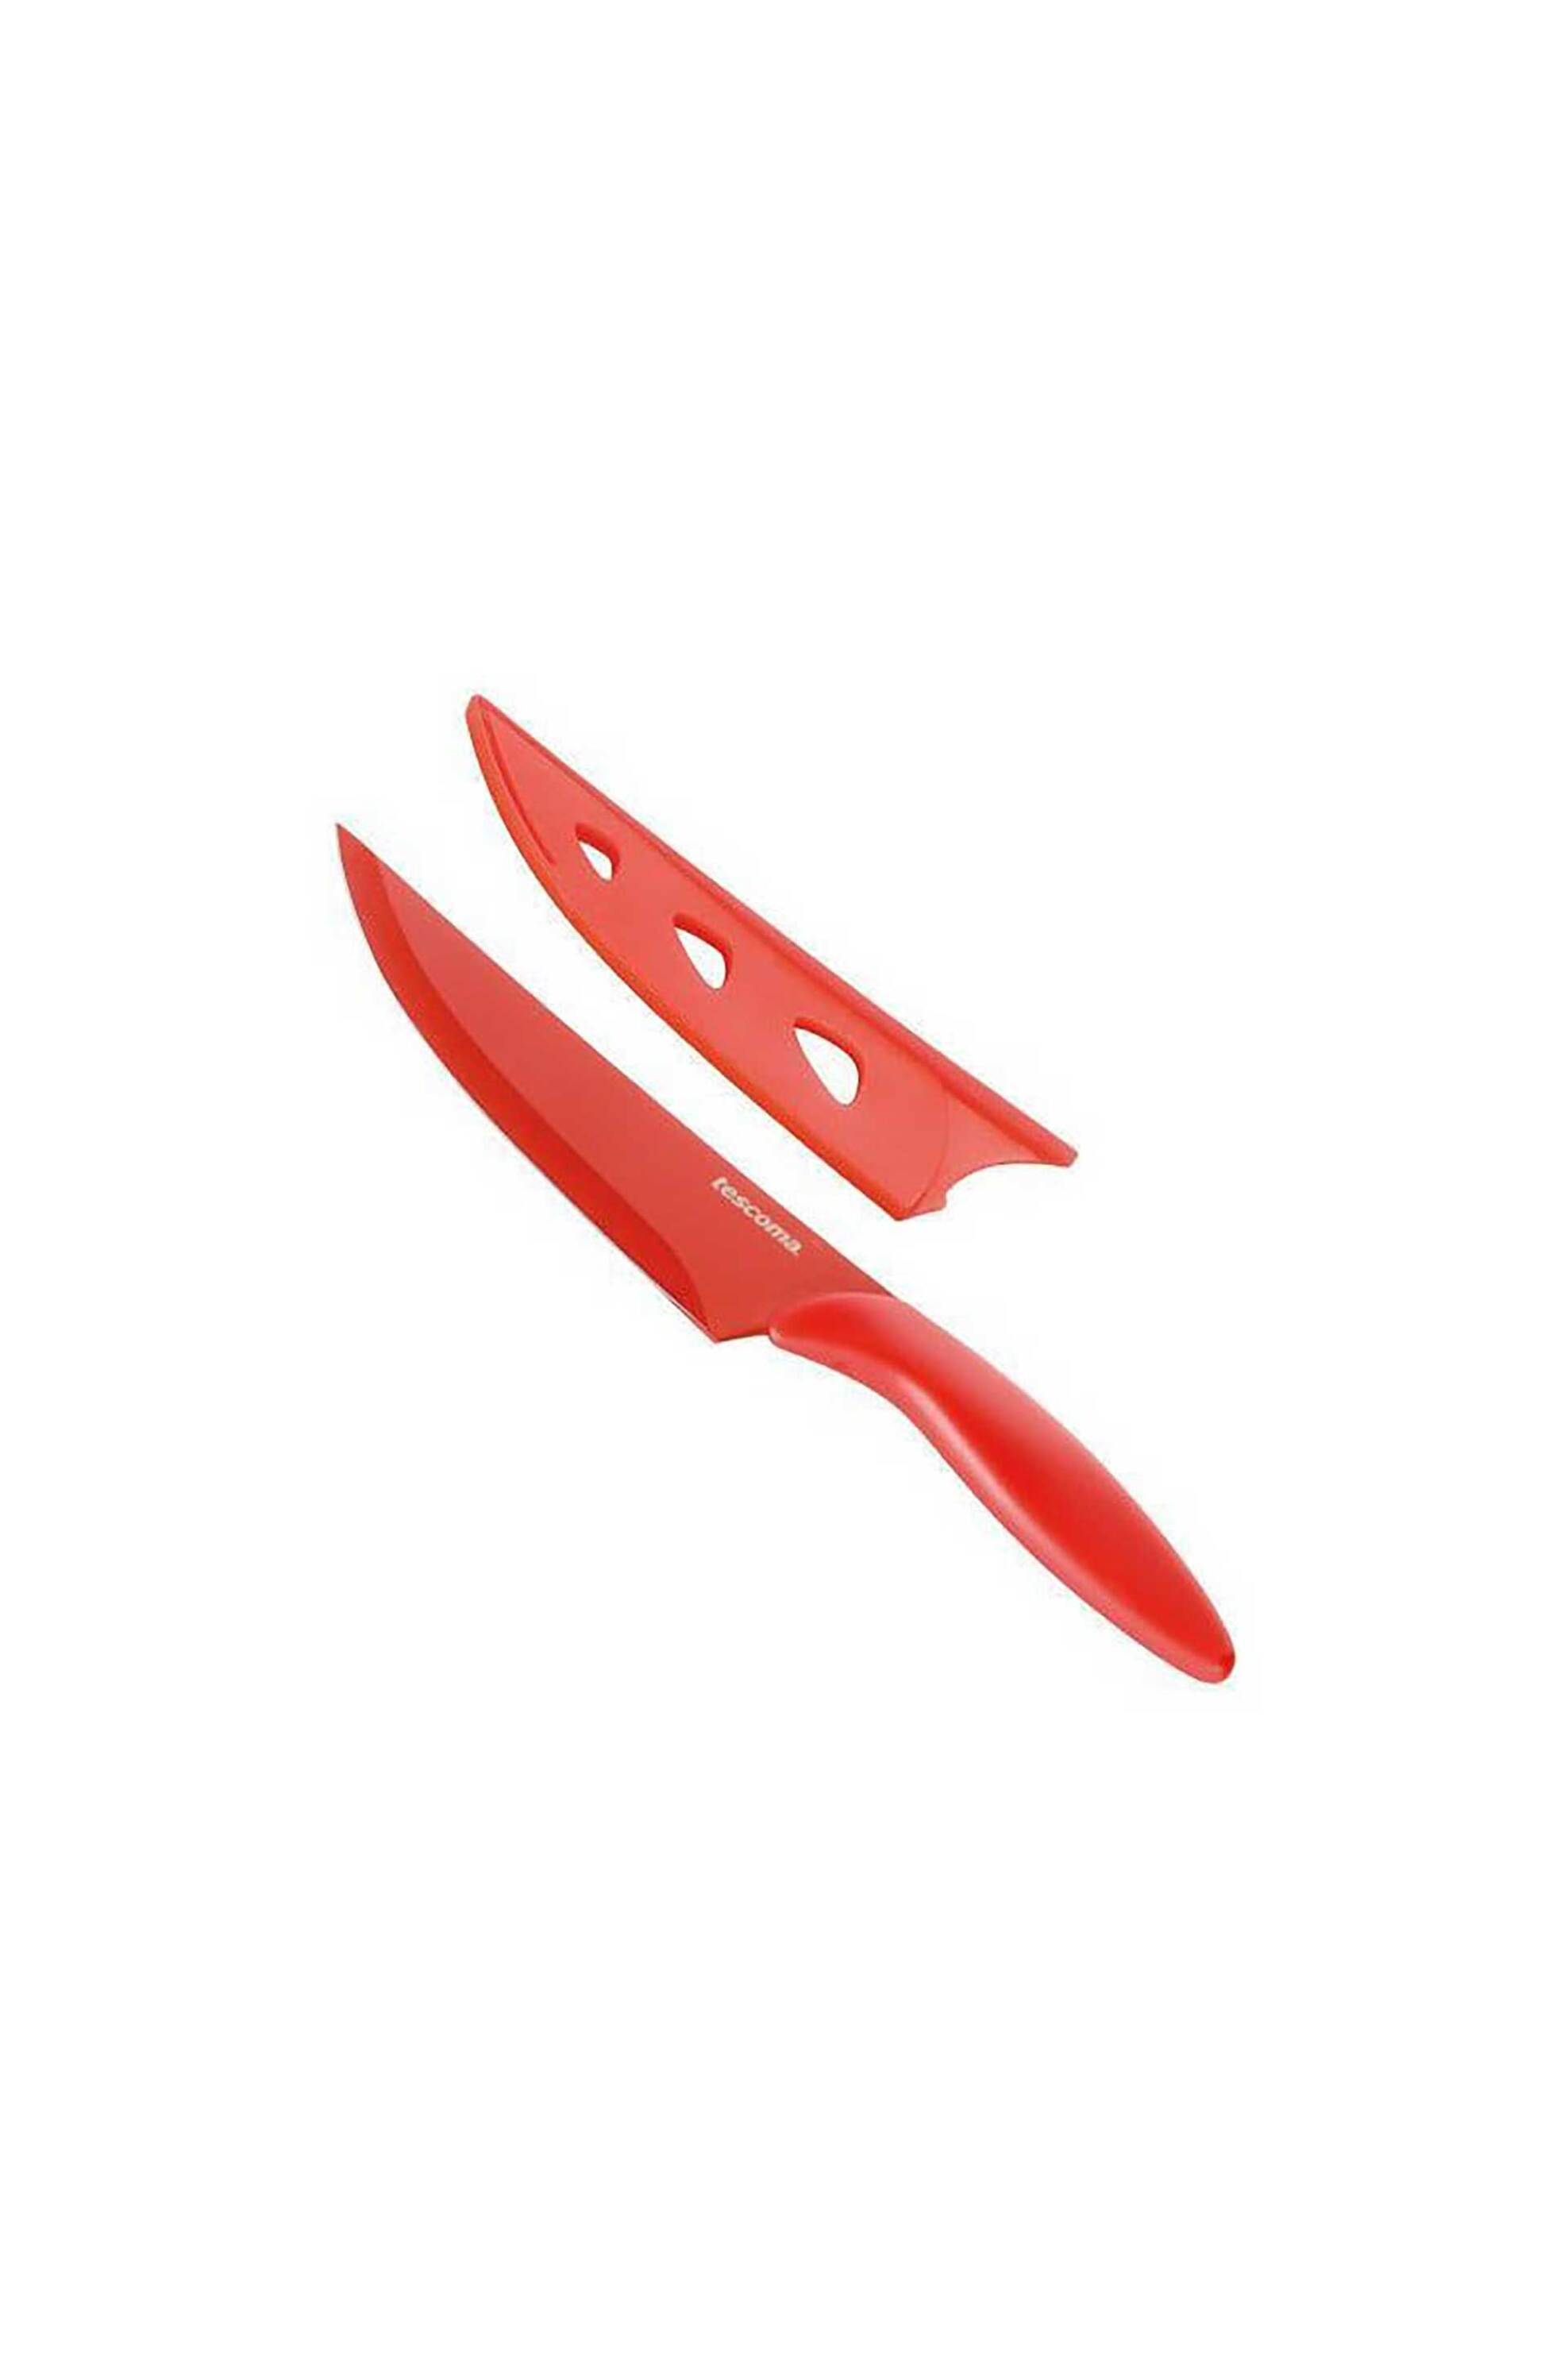 Home > ΚΟΥΖΙΝΑ > Αξεσουάρ Kουζίνας > Μαχαίρια & Καθαριστές Tescoma μαχαίρι του σεφ με ανοξείδωτη αντικολλητική λεπίδα 13 cm - 863088